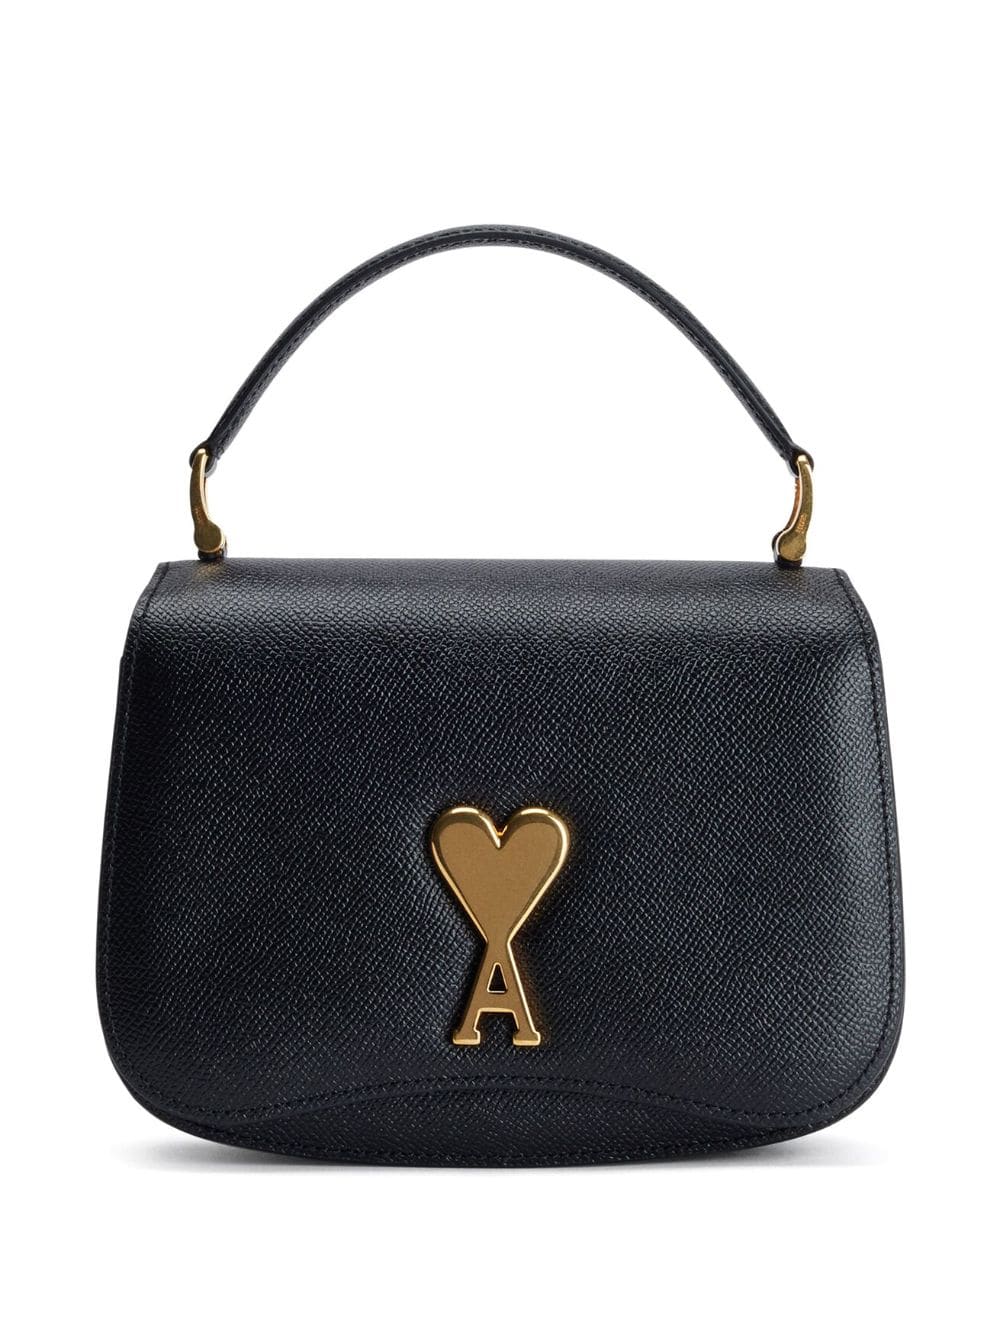 Ami Alexandre Mattiussi Stylish Mini Top-handle Handbag For Women In Black Calf Leather